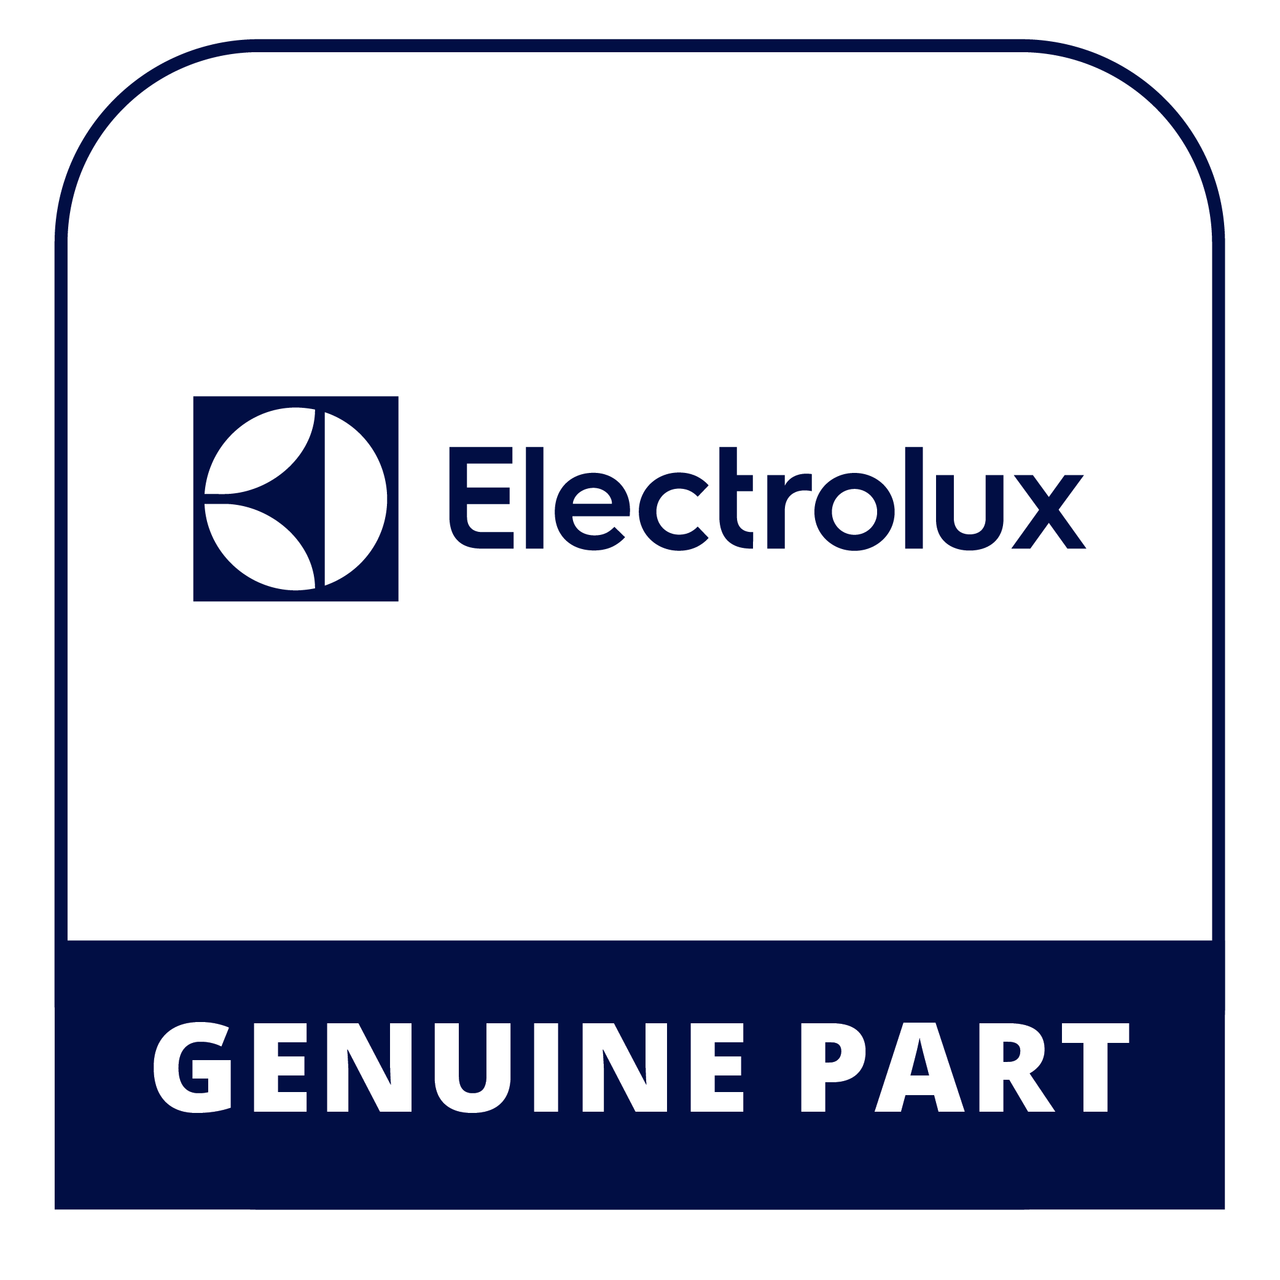 Frigidaire - Electrolux 137553000 - Gasket - Genuine Electrolux Part